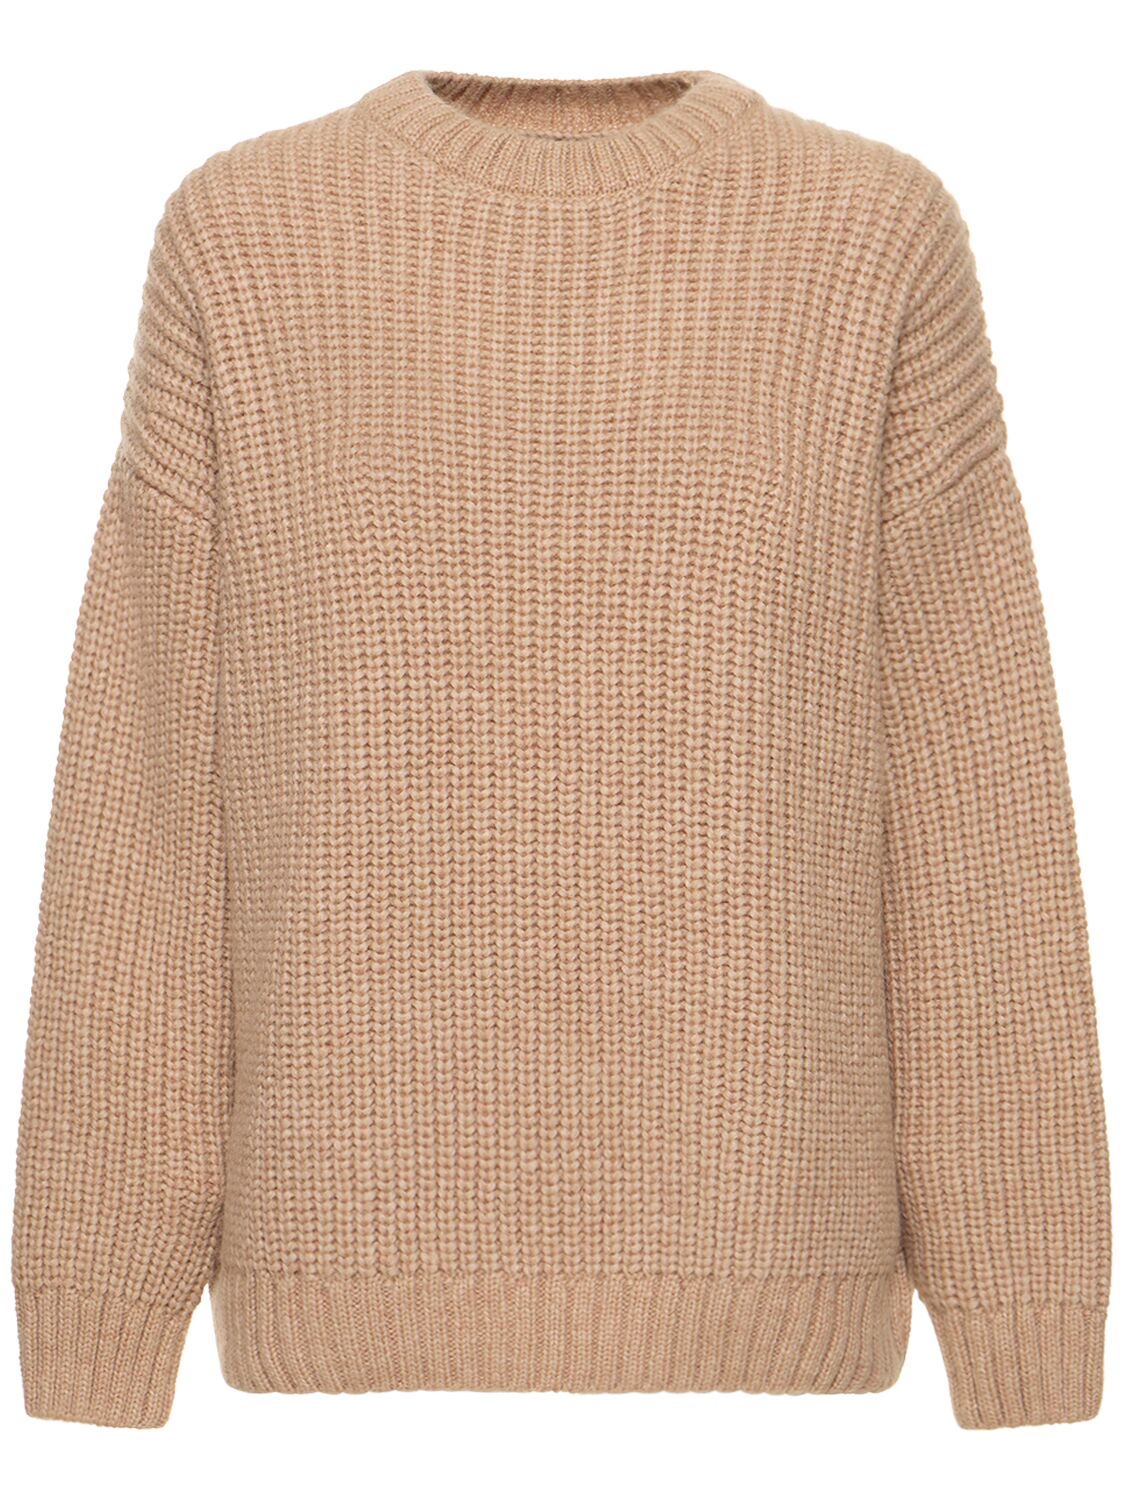 Image of Sydney Wool Blend Crewneck Sweater